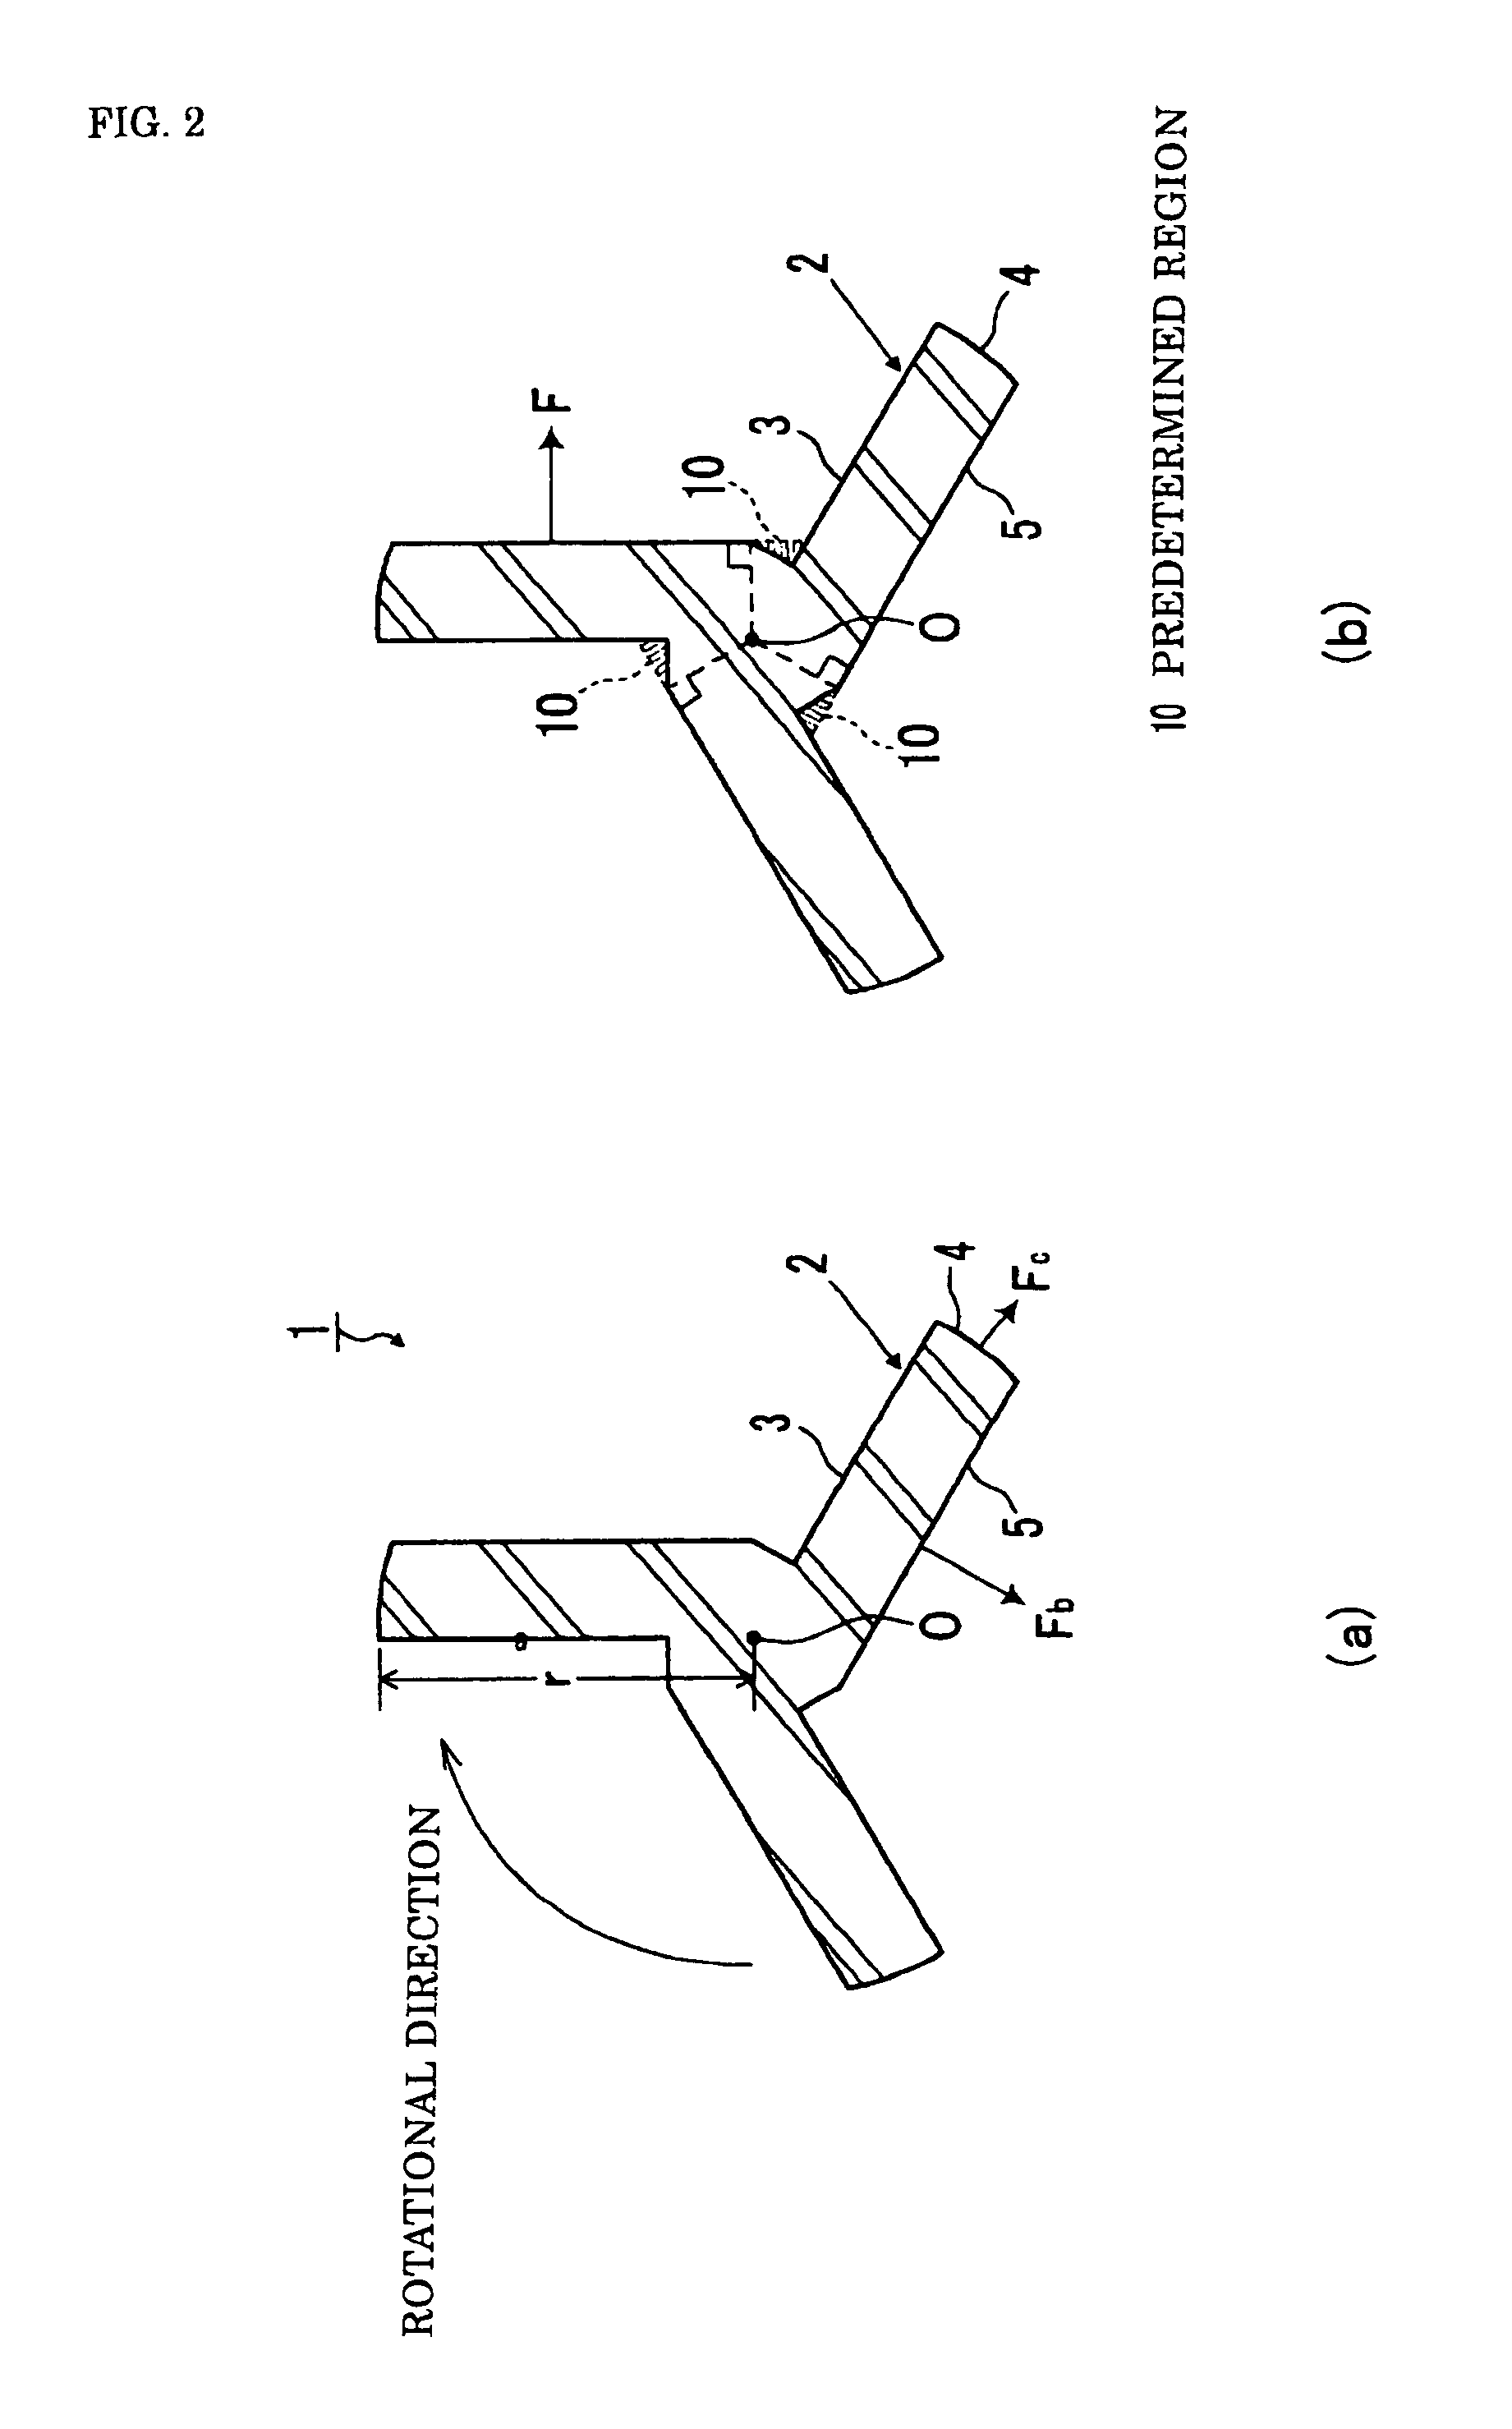 Light pressure rotator and light pressure rotating device